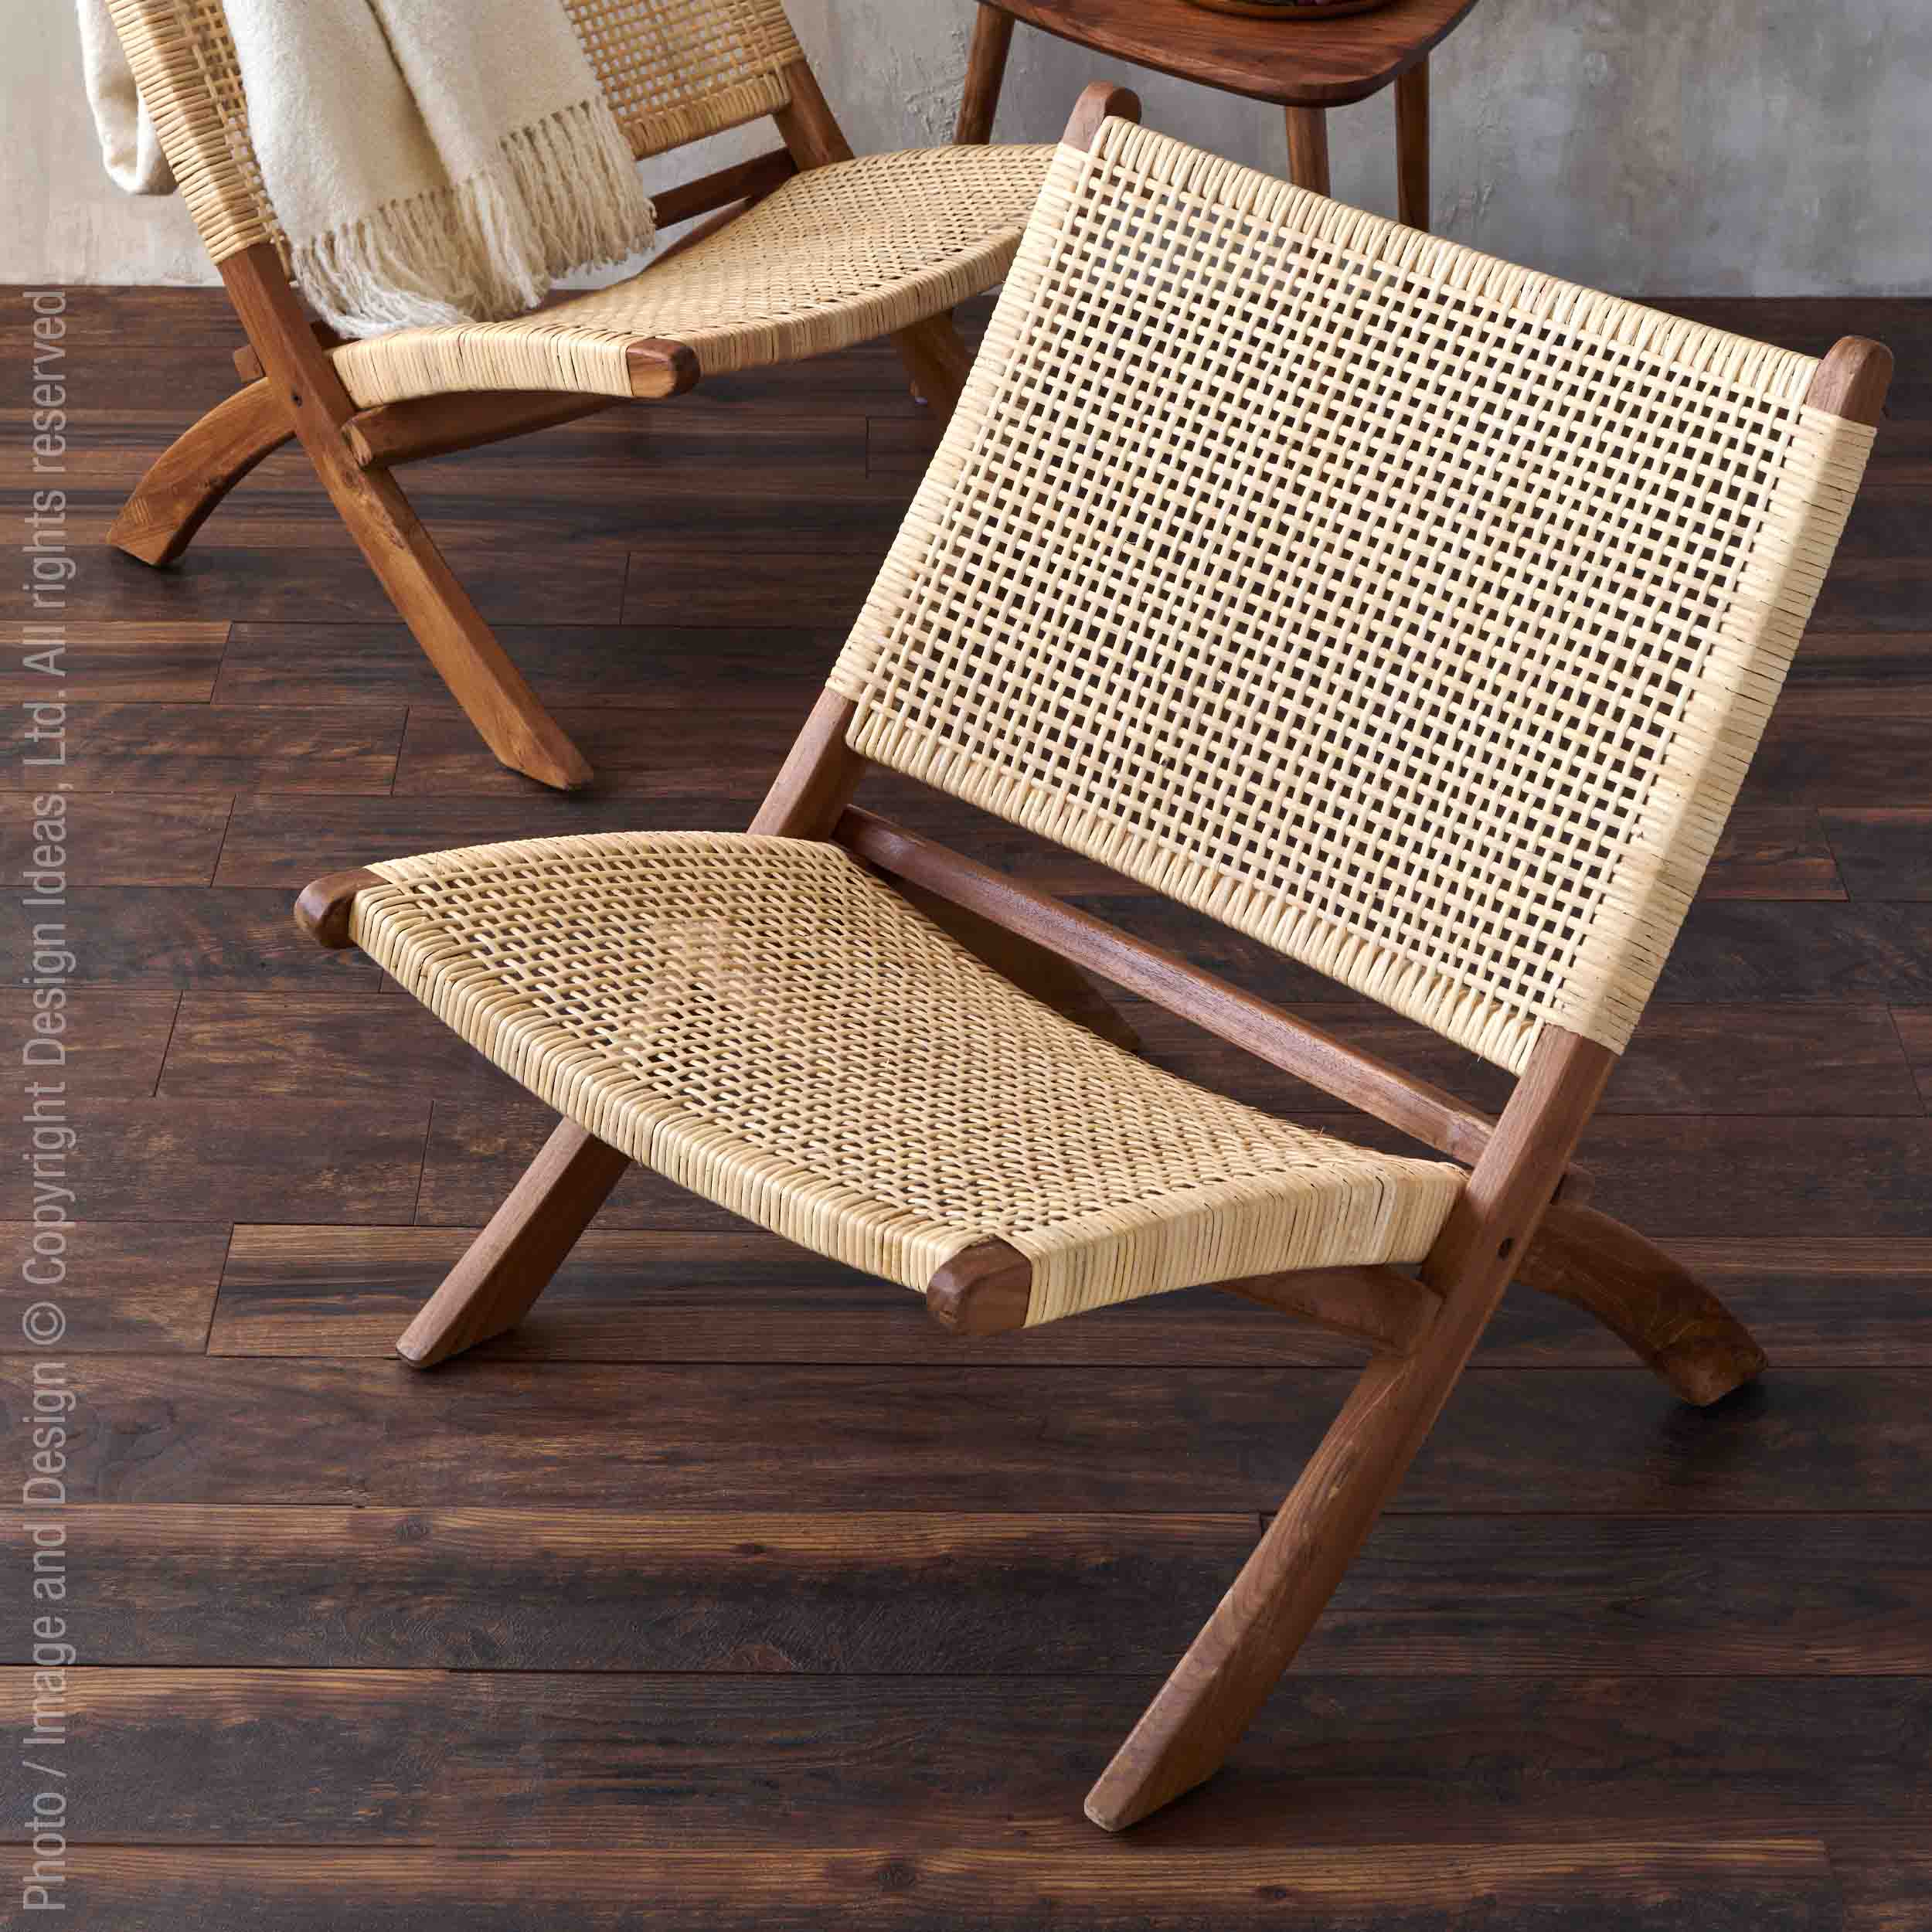 Alta™ Woven Teak and Rattan Folding Lounge Chair